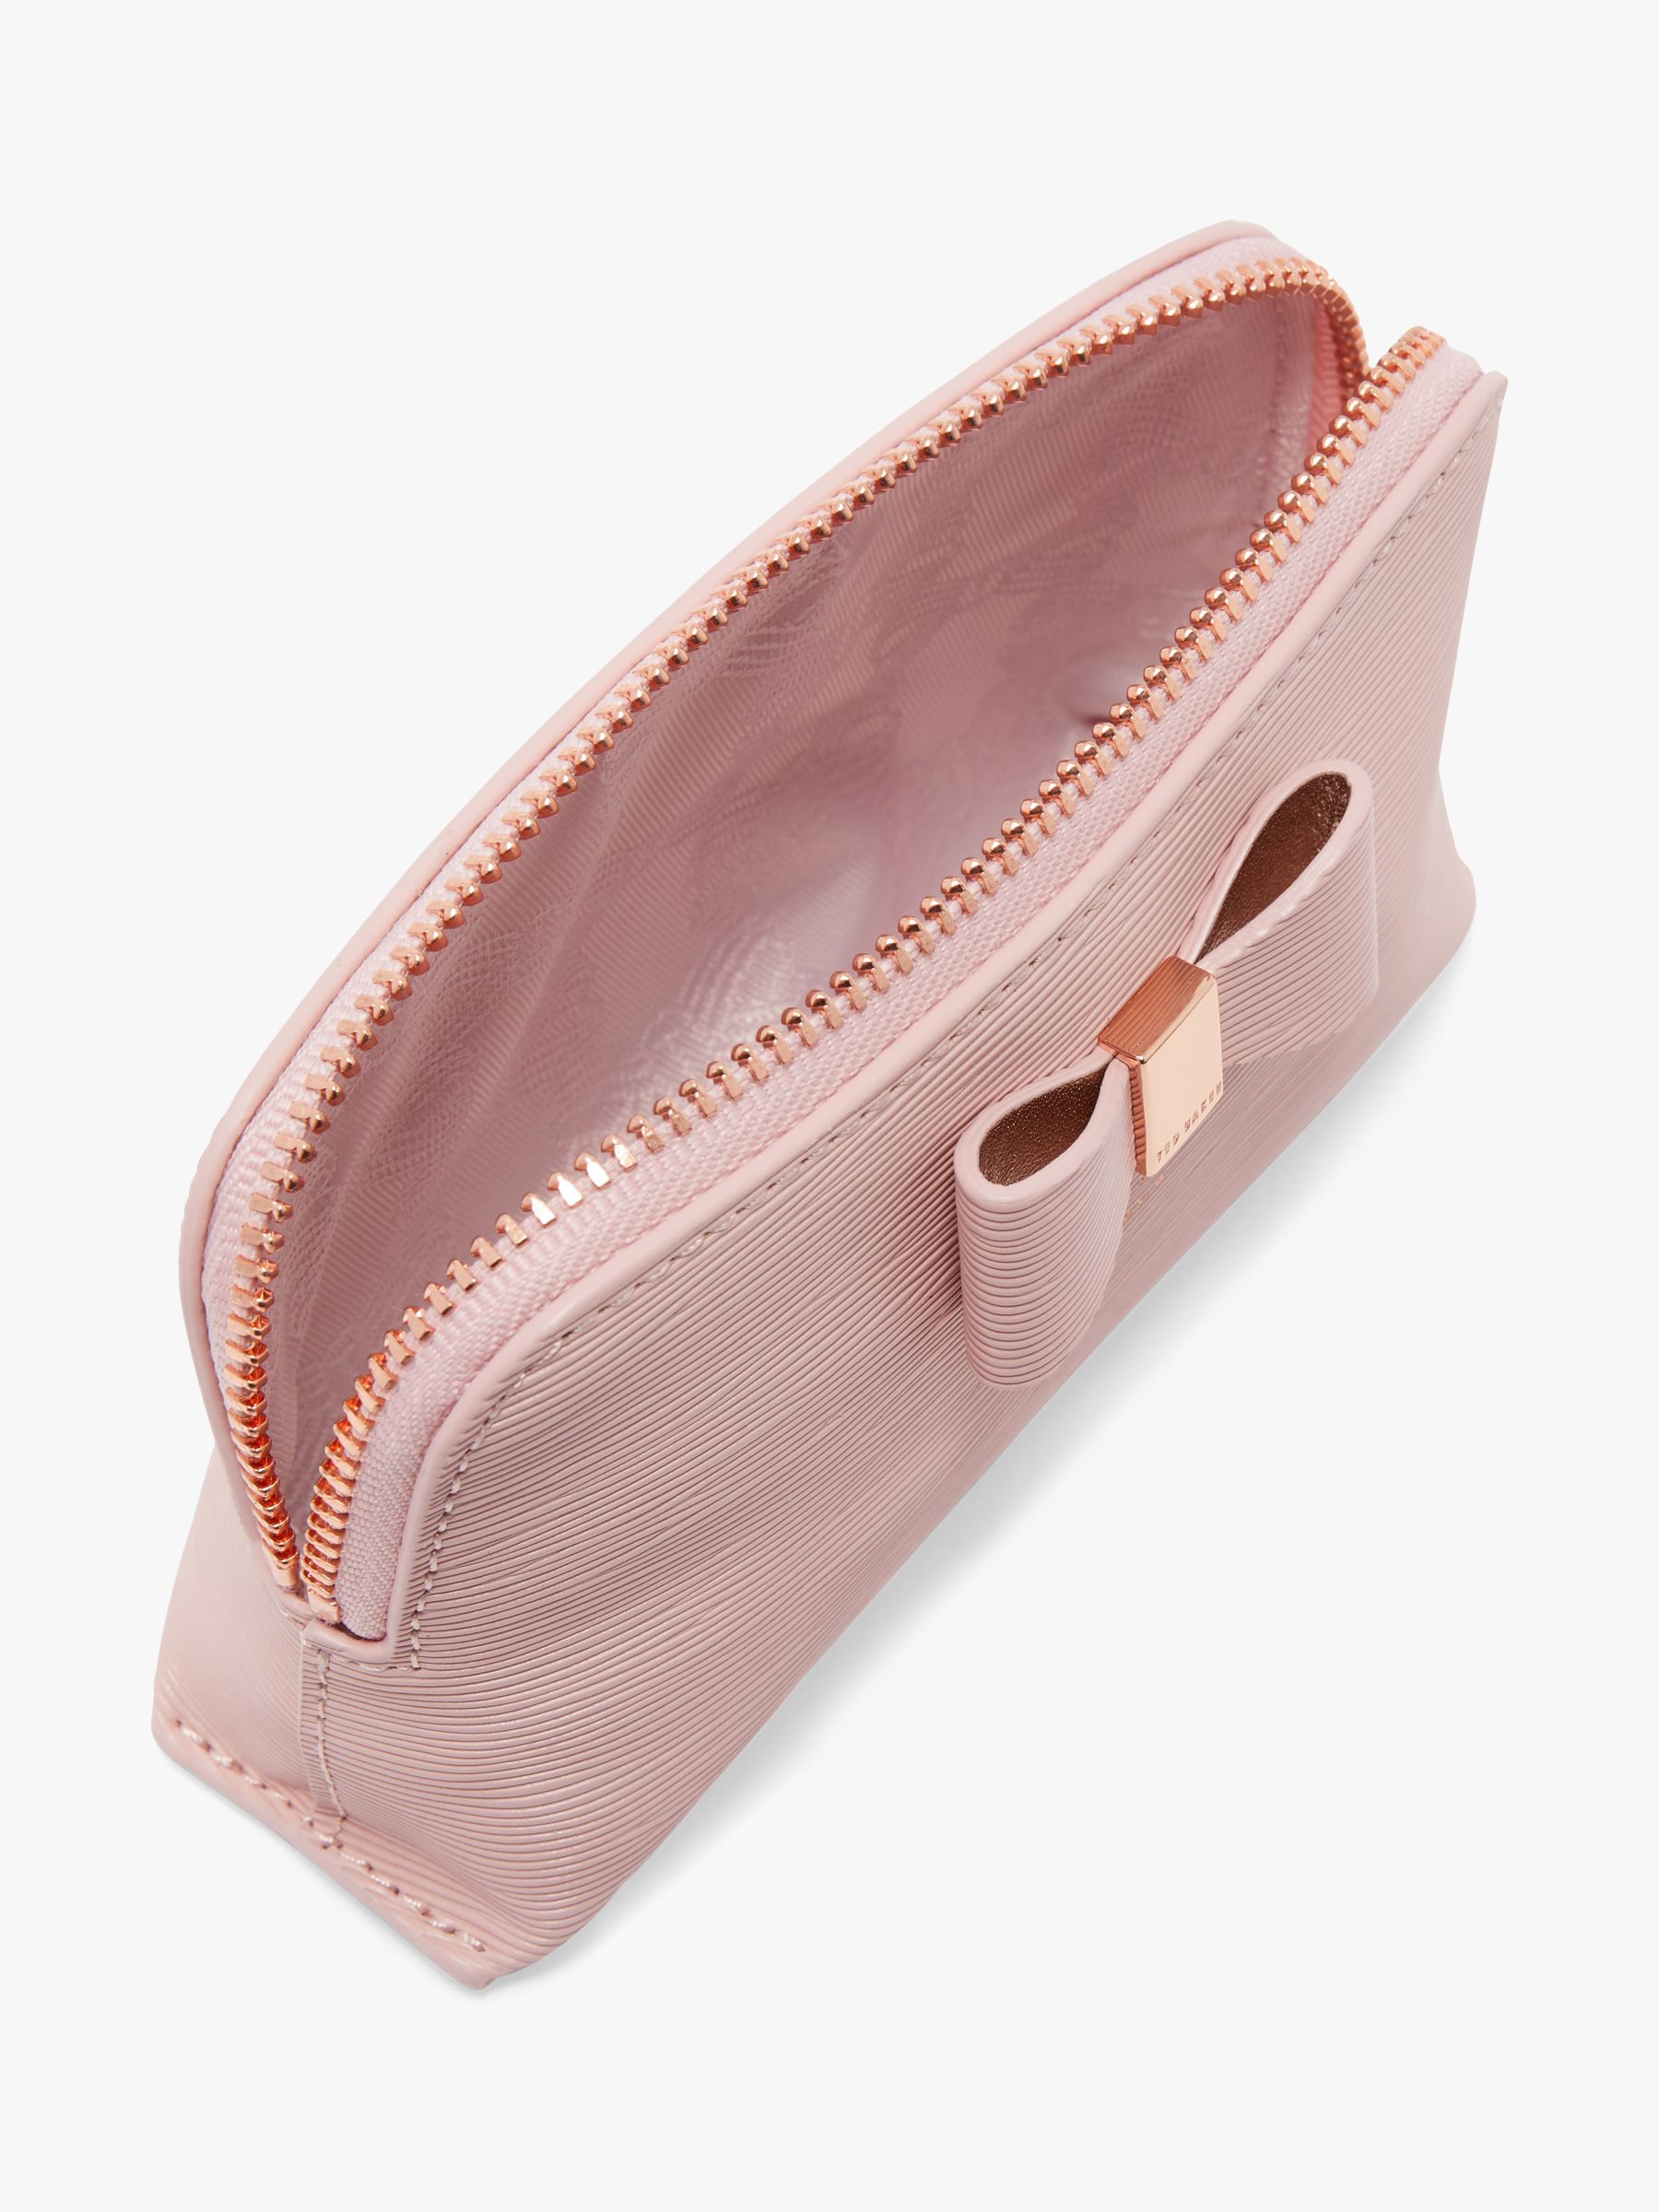 Ted Baker Chlolou Leather Bow Makeup Bag, Light Pink at John Lewis & Partners